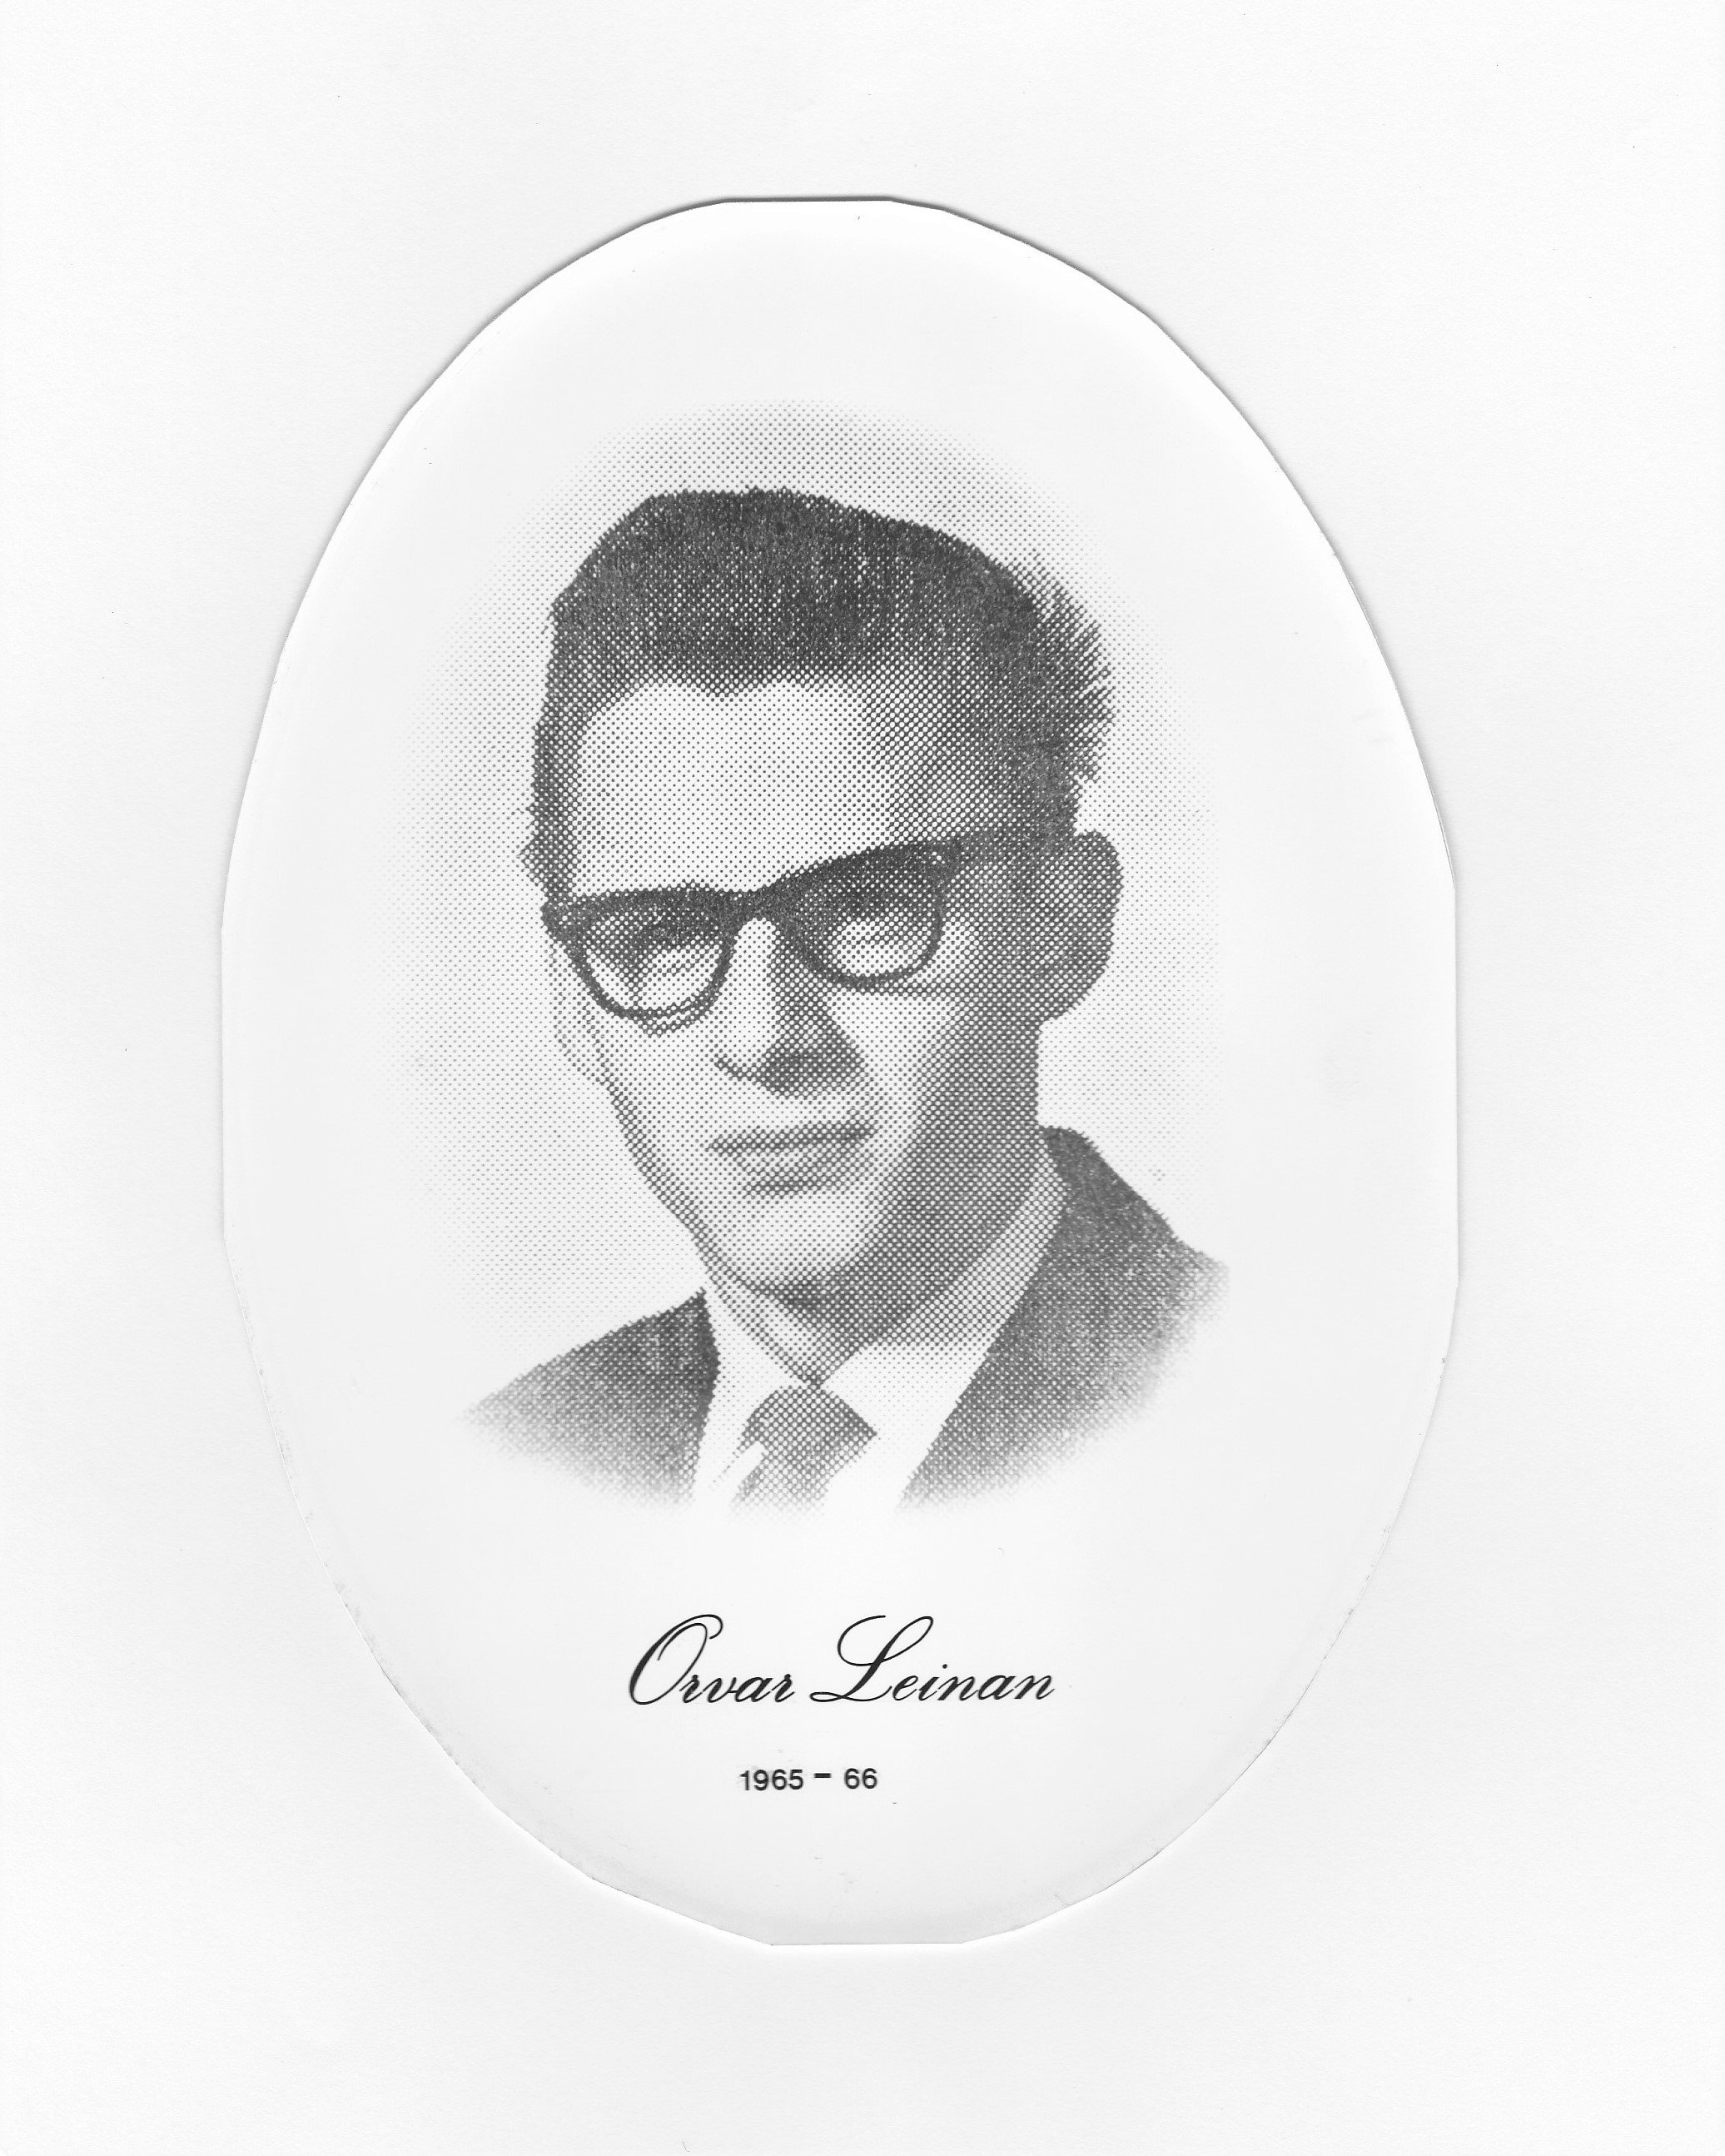 22 Orvar Leinan 1965-66.jpg